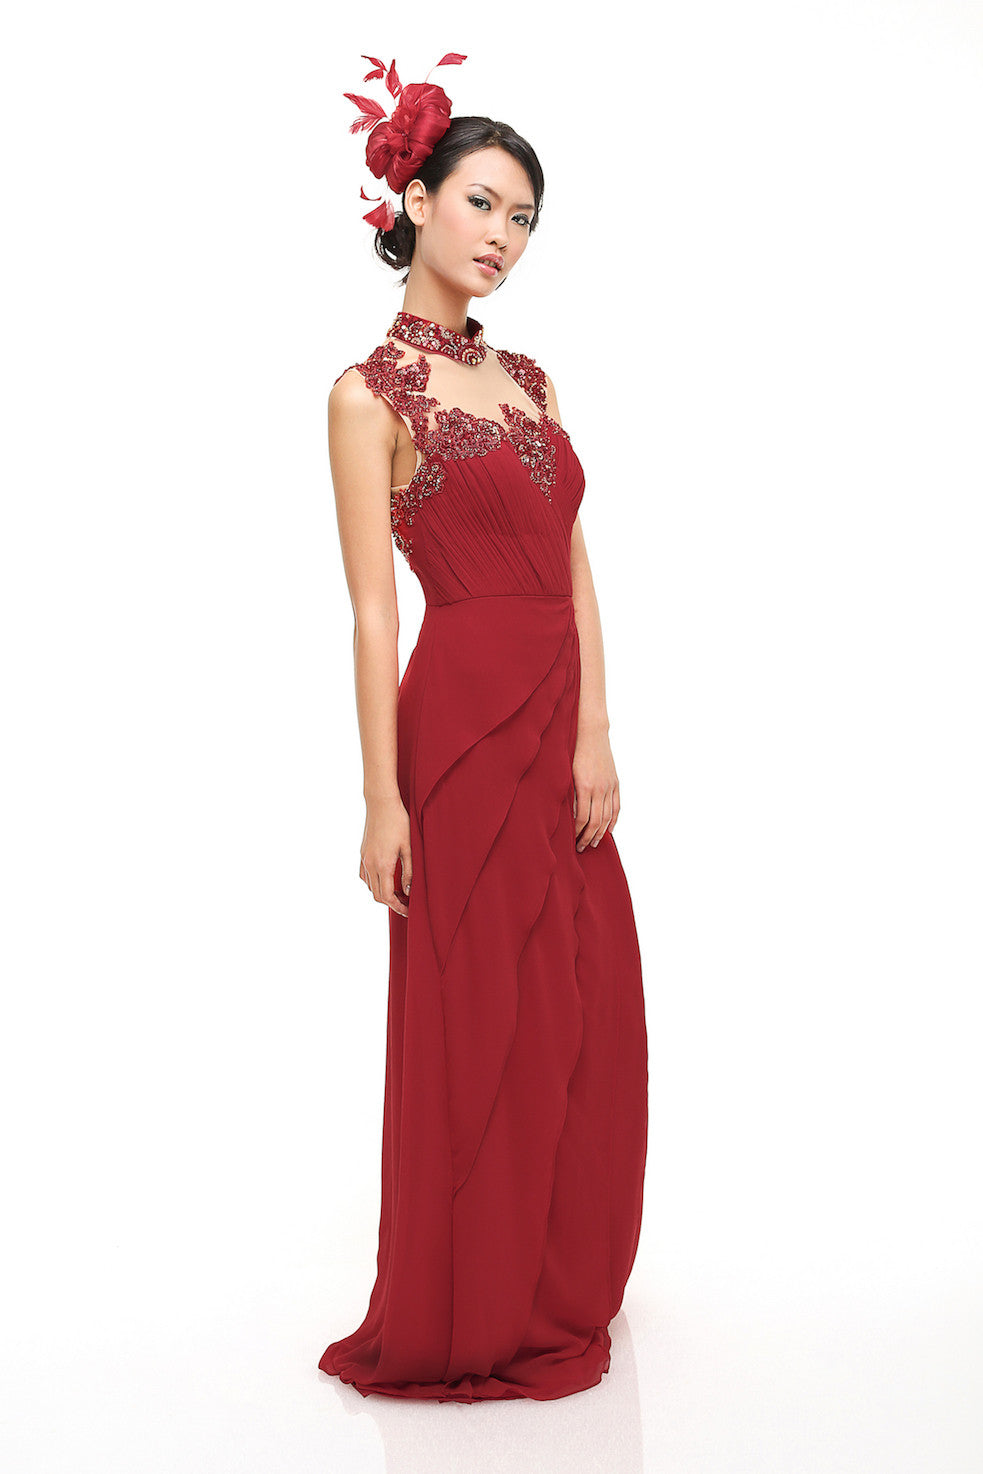 Fluorescence - Buy: Red Beaded Cheongsam Chiffon Dress-The Dresscodes - 1